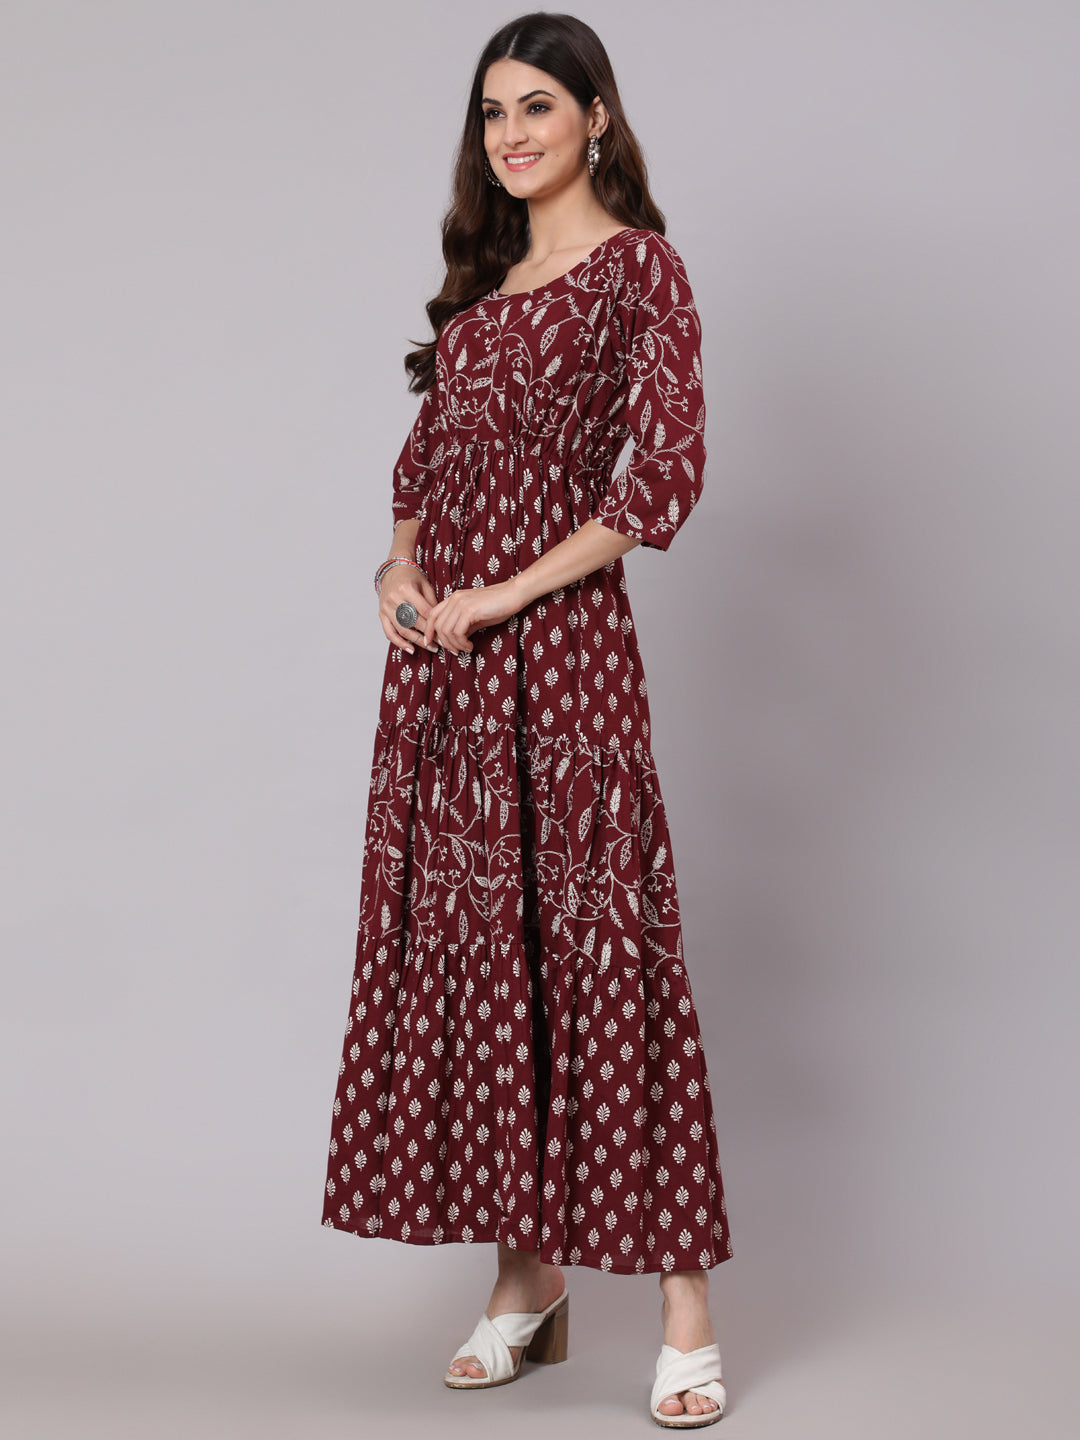 Burgundy Ethnic Printed Flared Dress With Three Quarter Sleevs